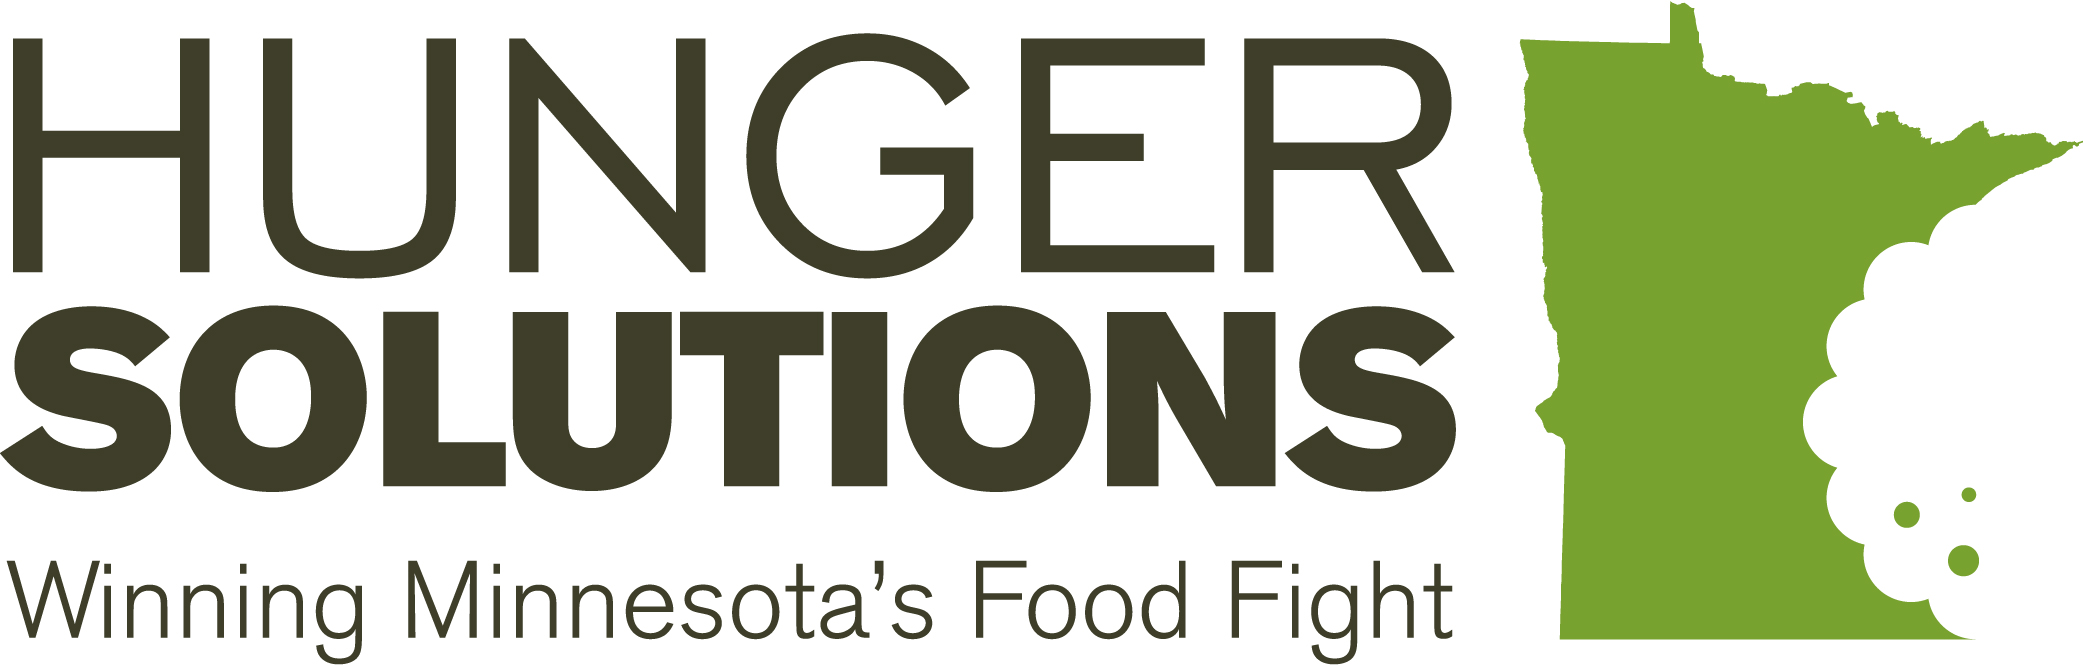 Winning Minnesota's Food Fight